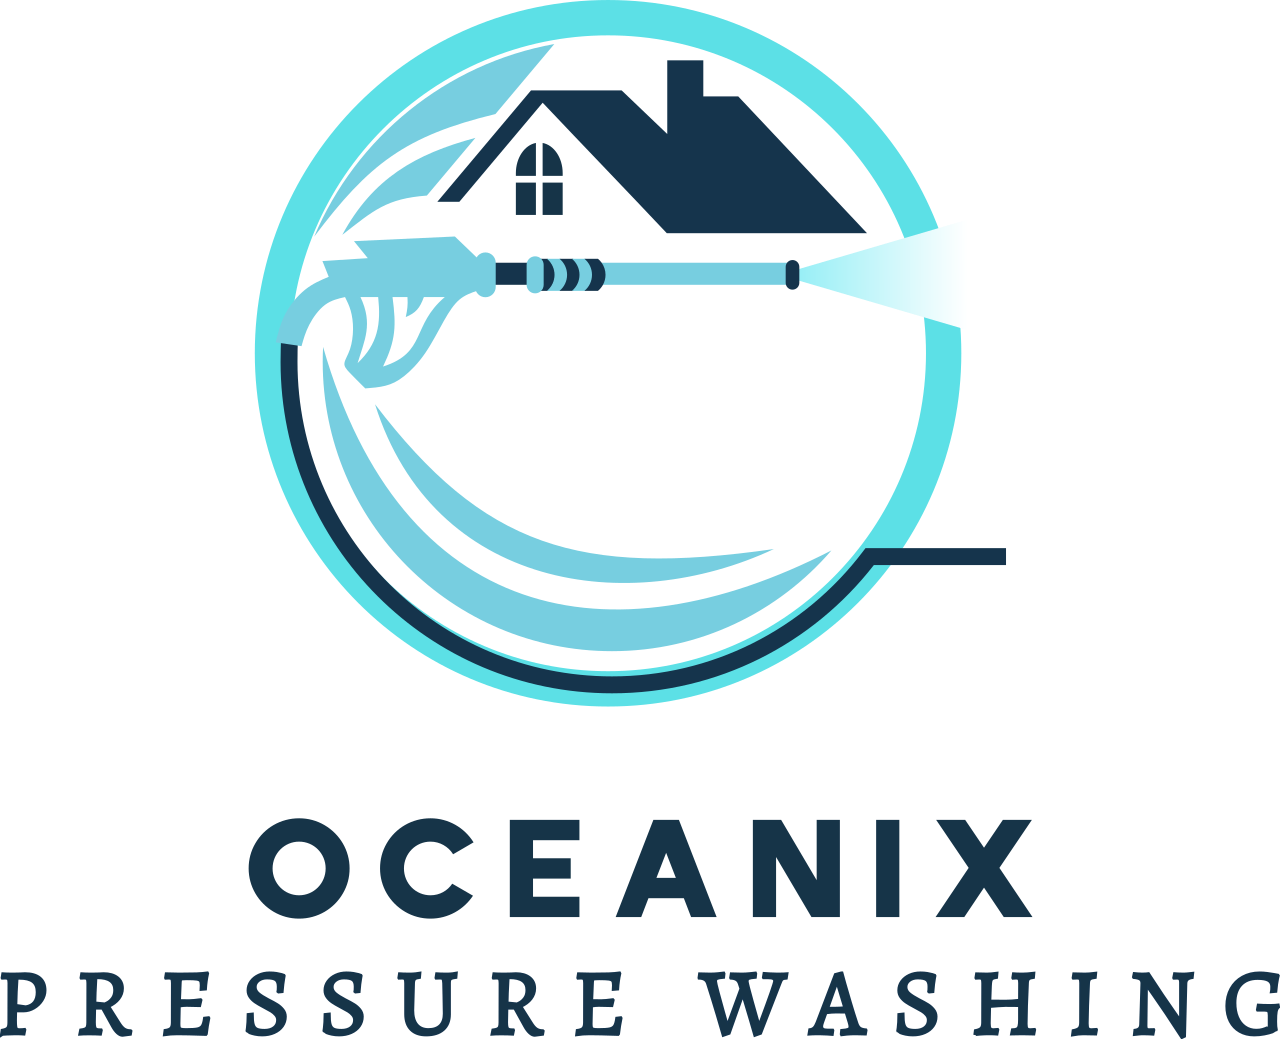 OCEANIX's logo